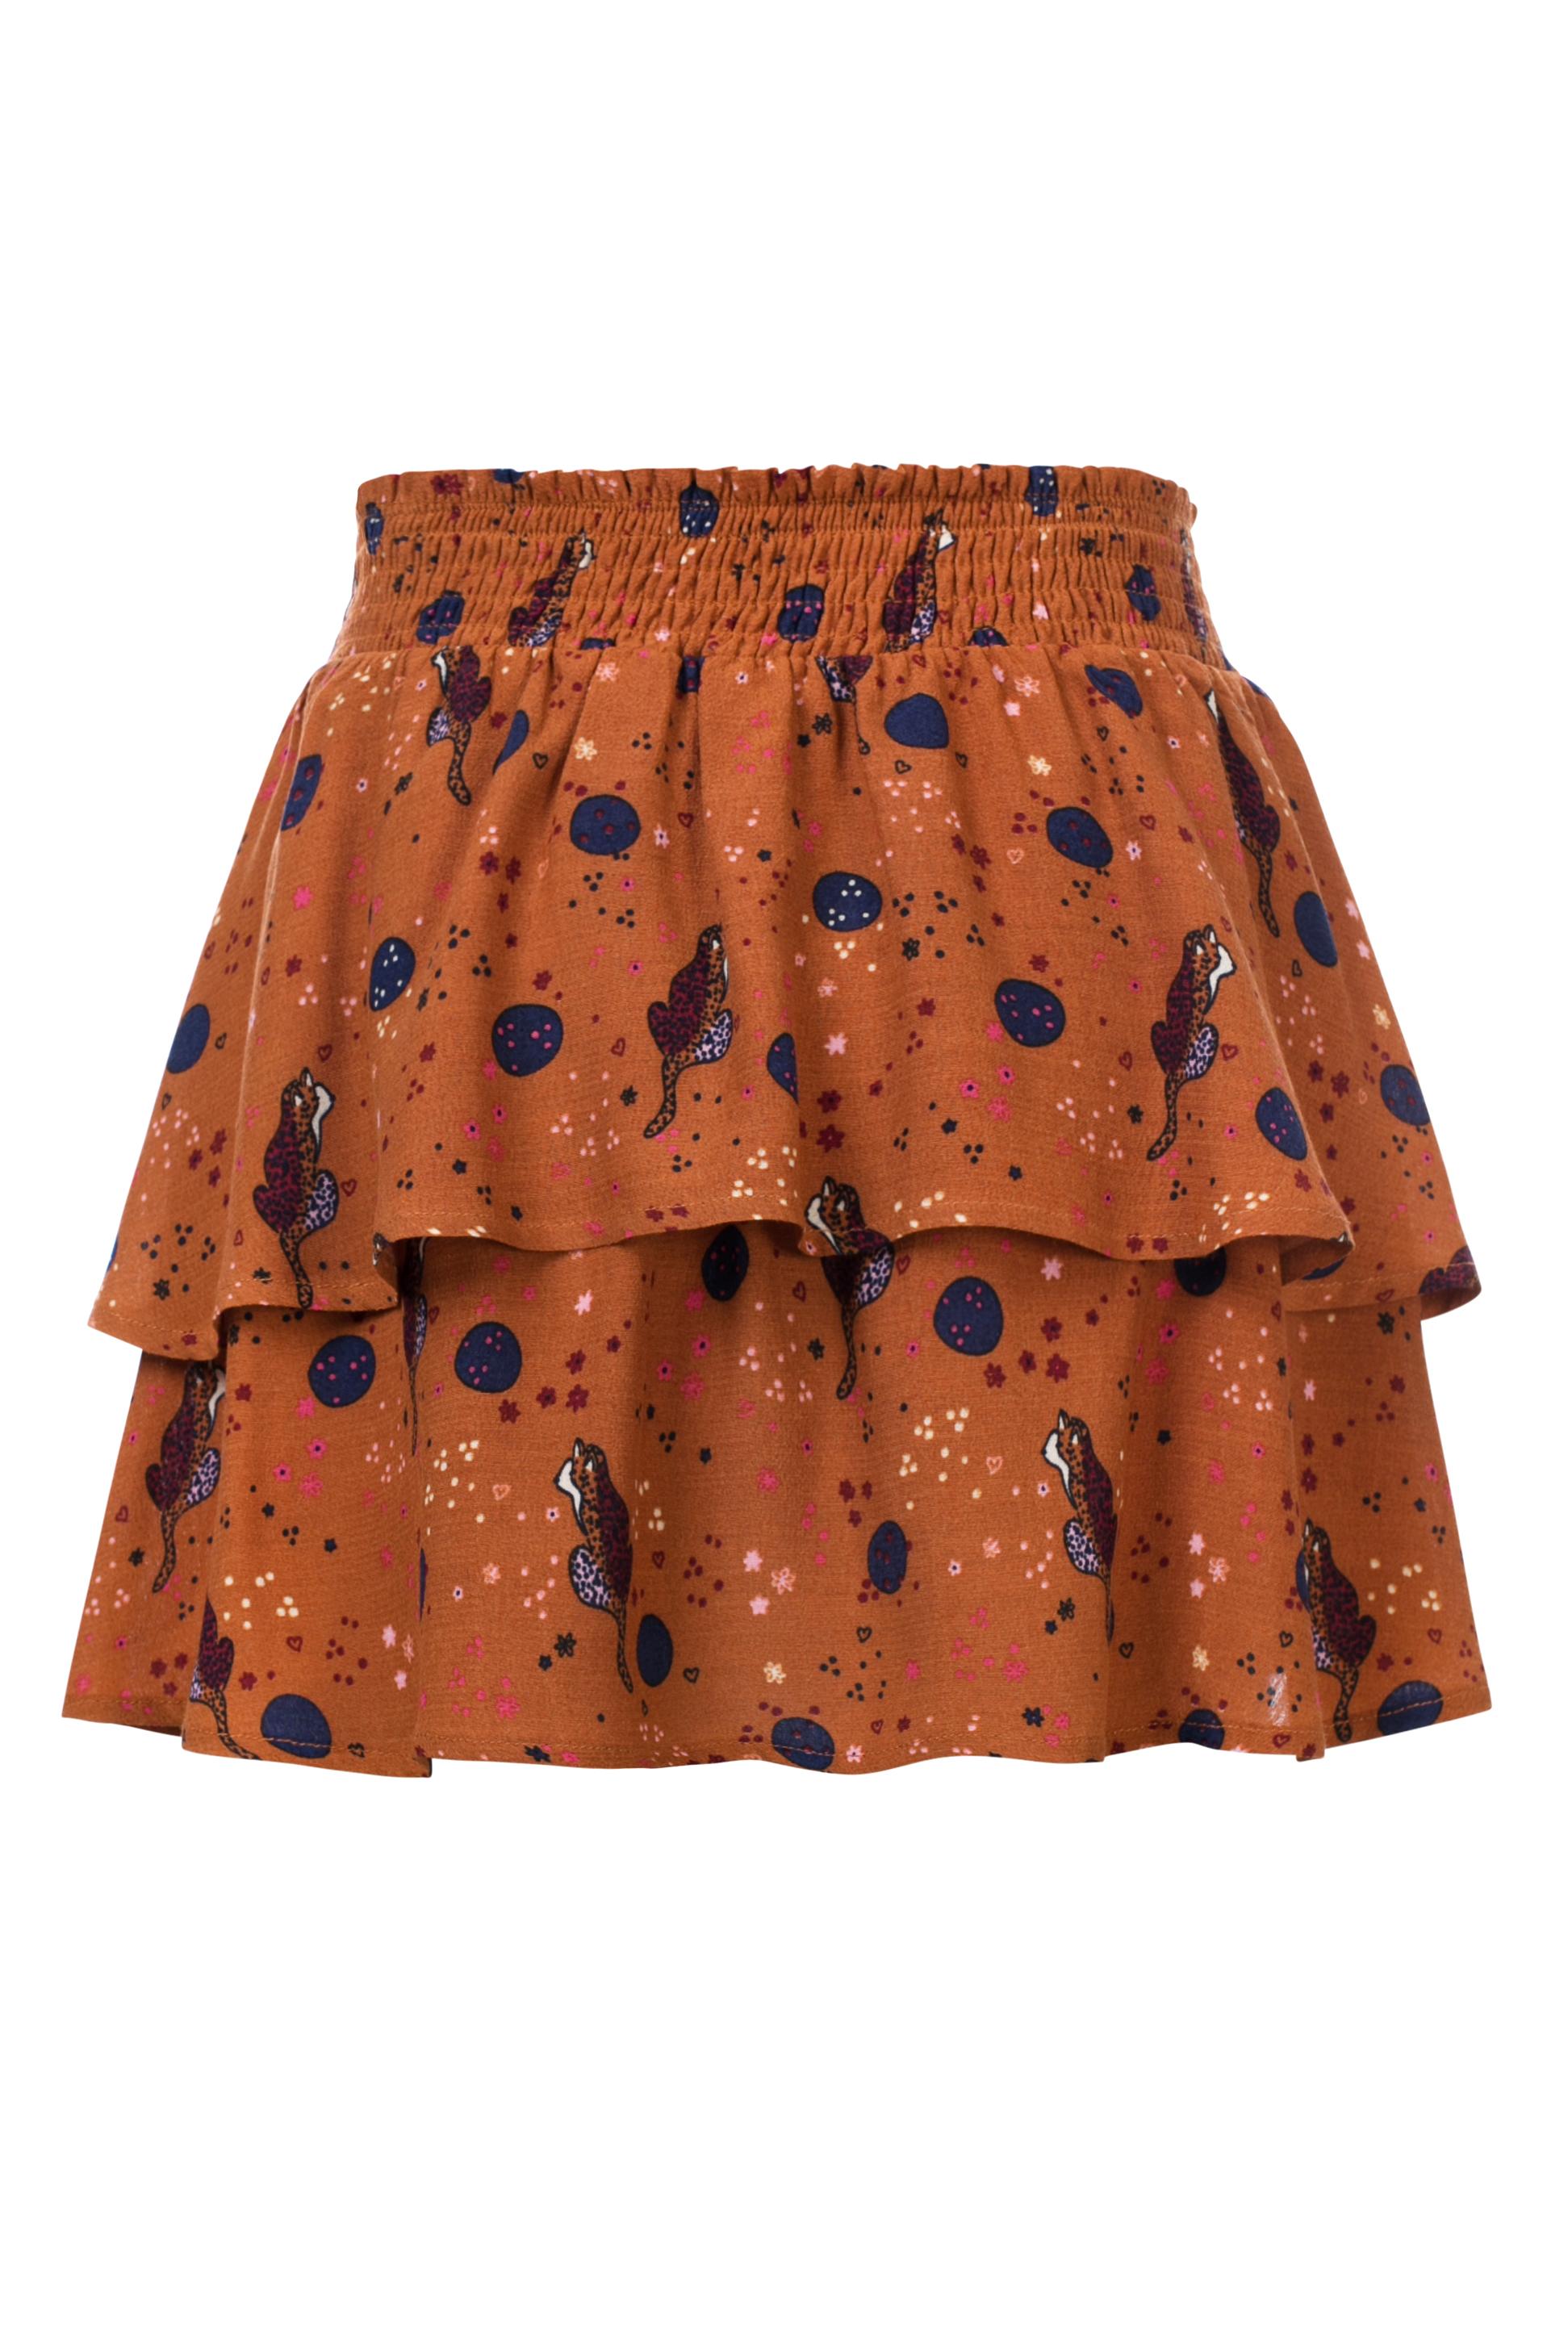 Meisjes Little skirt van Looxs Little in de kleur Caramel in maat 128.